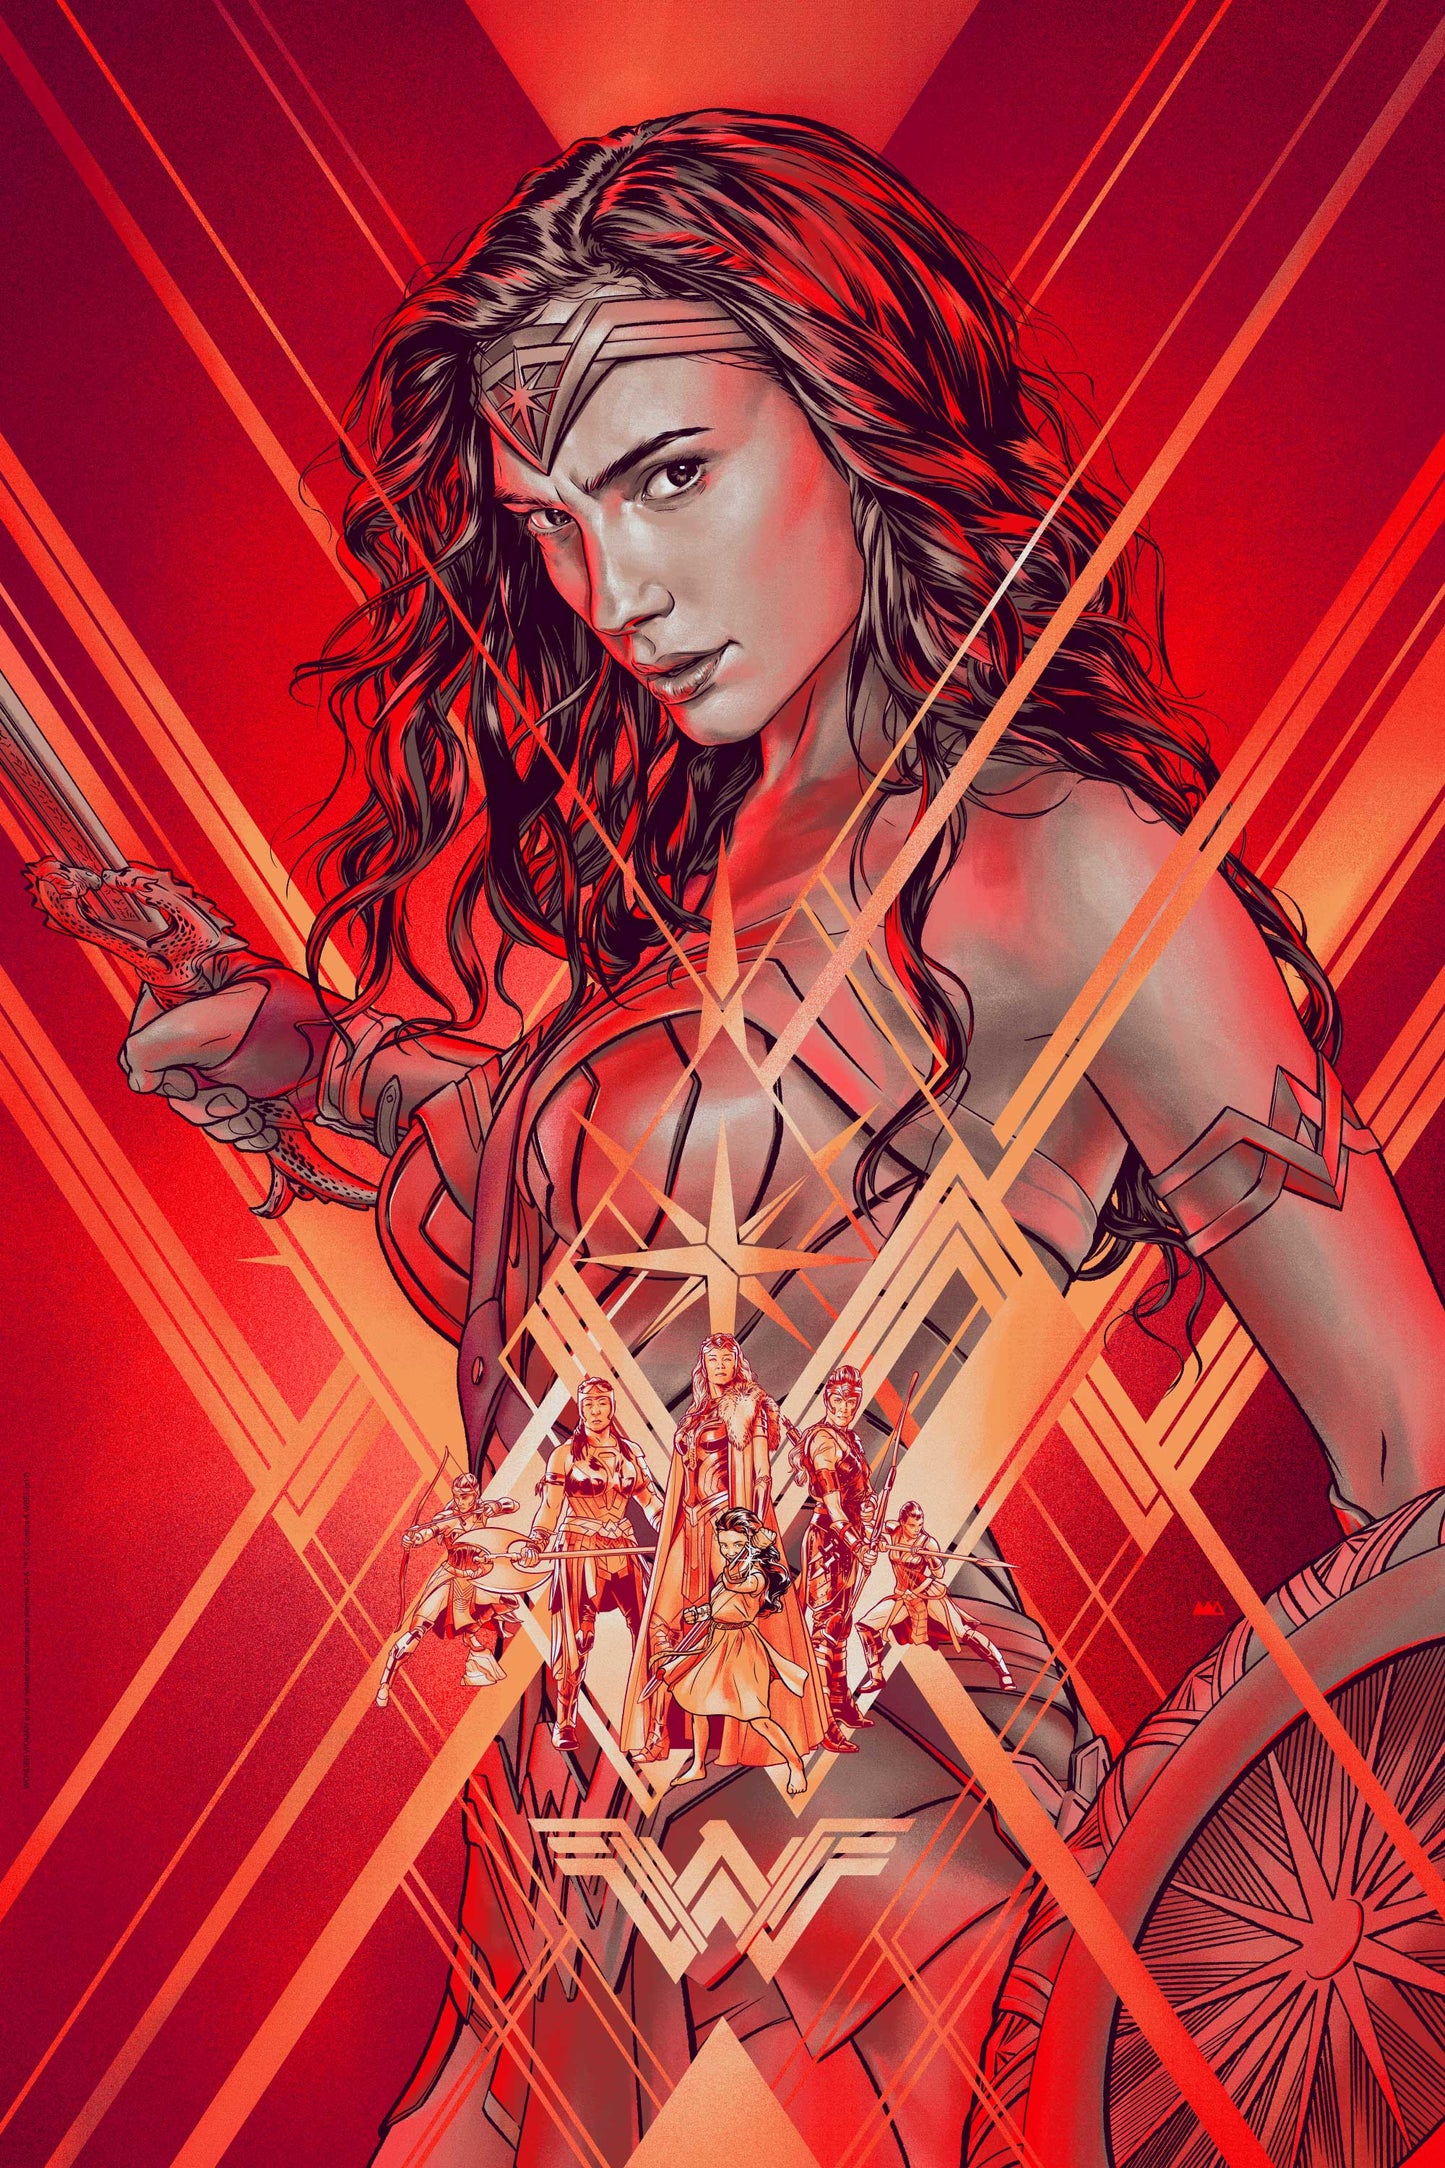 Martin Ansin "Wonder Woman" Timed Edition